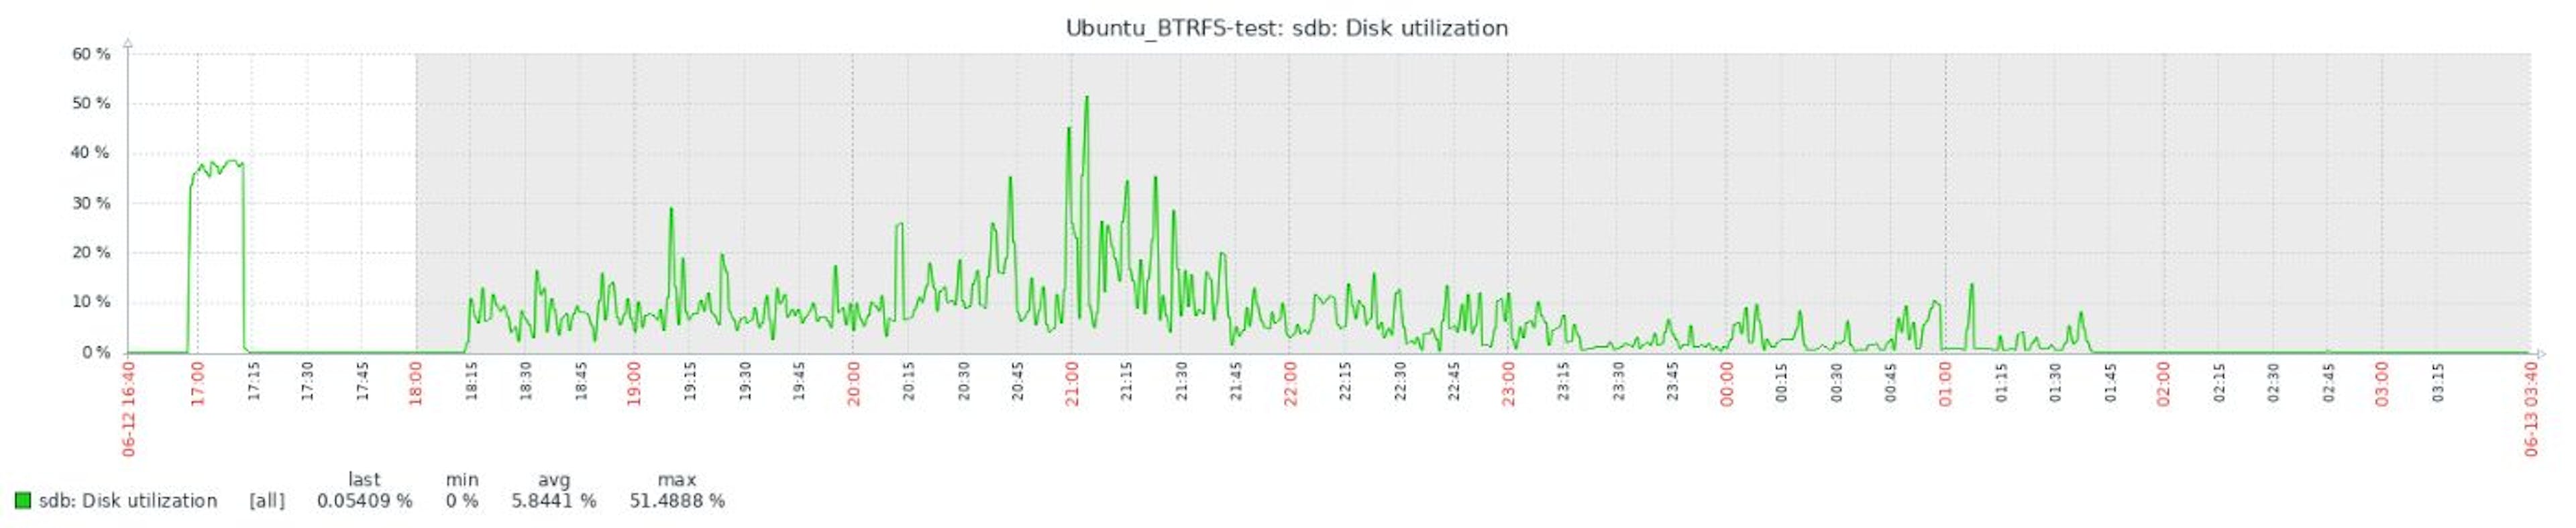 2.7.3 BTRFS Disk utilization full